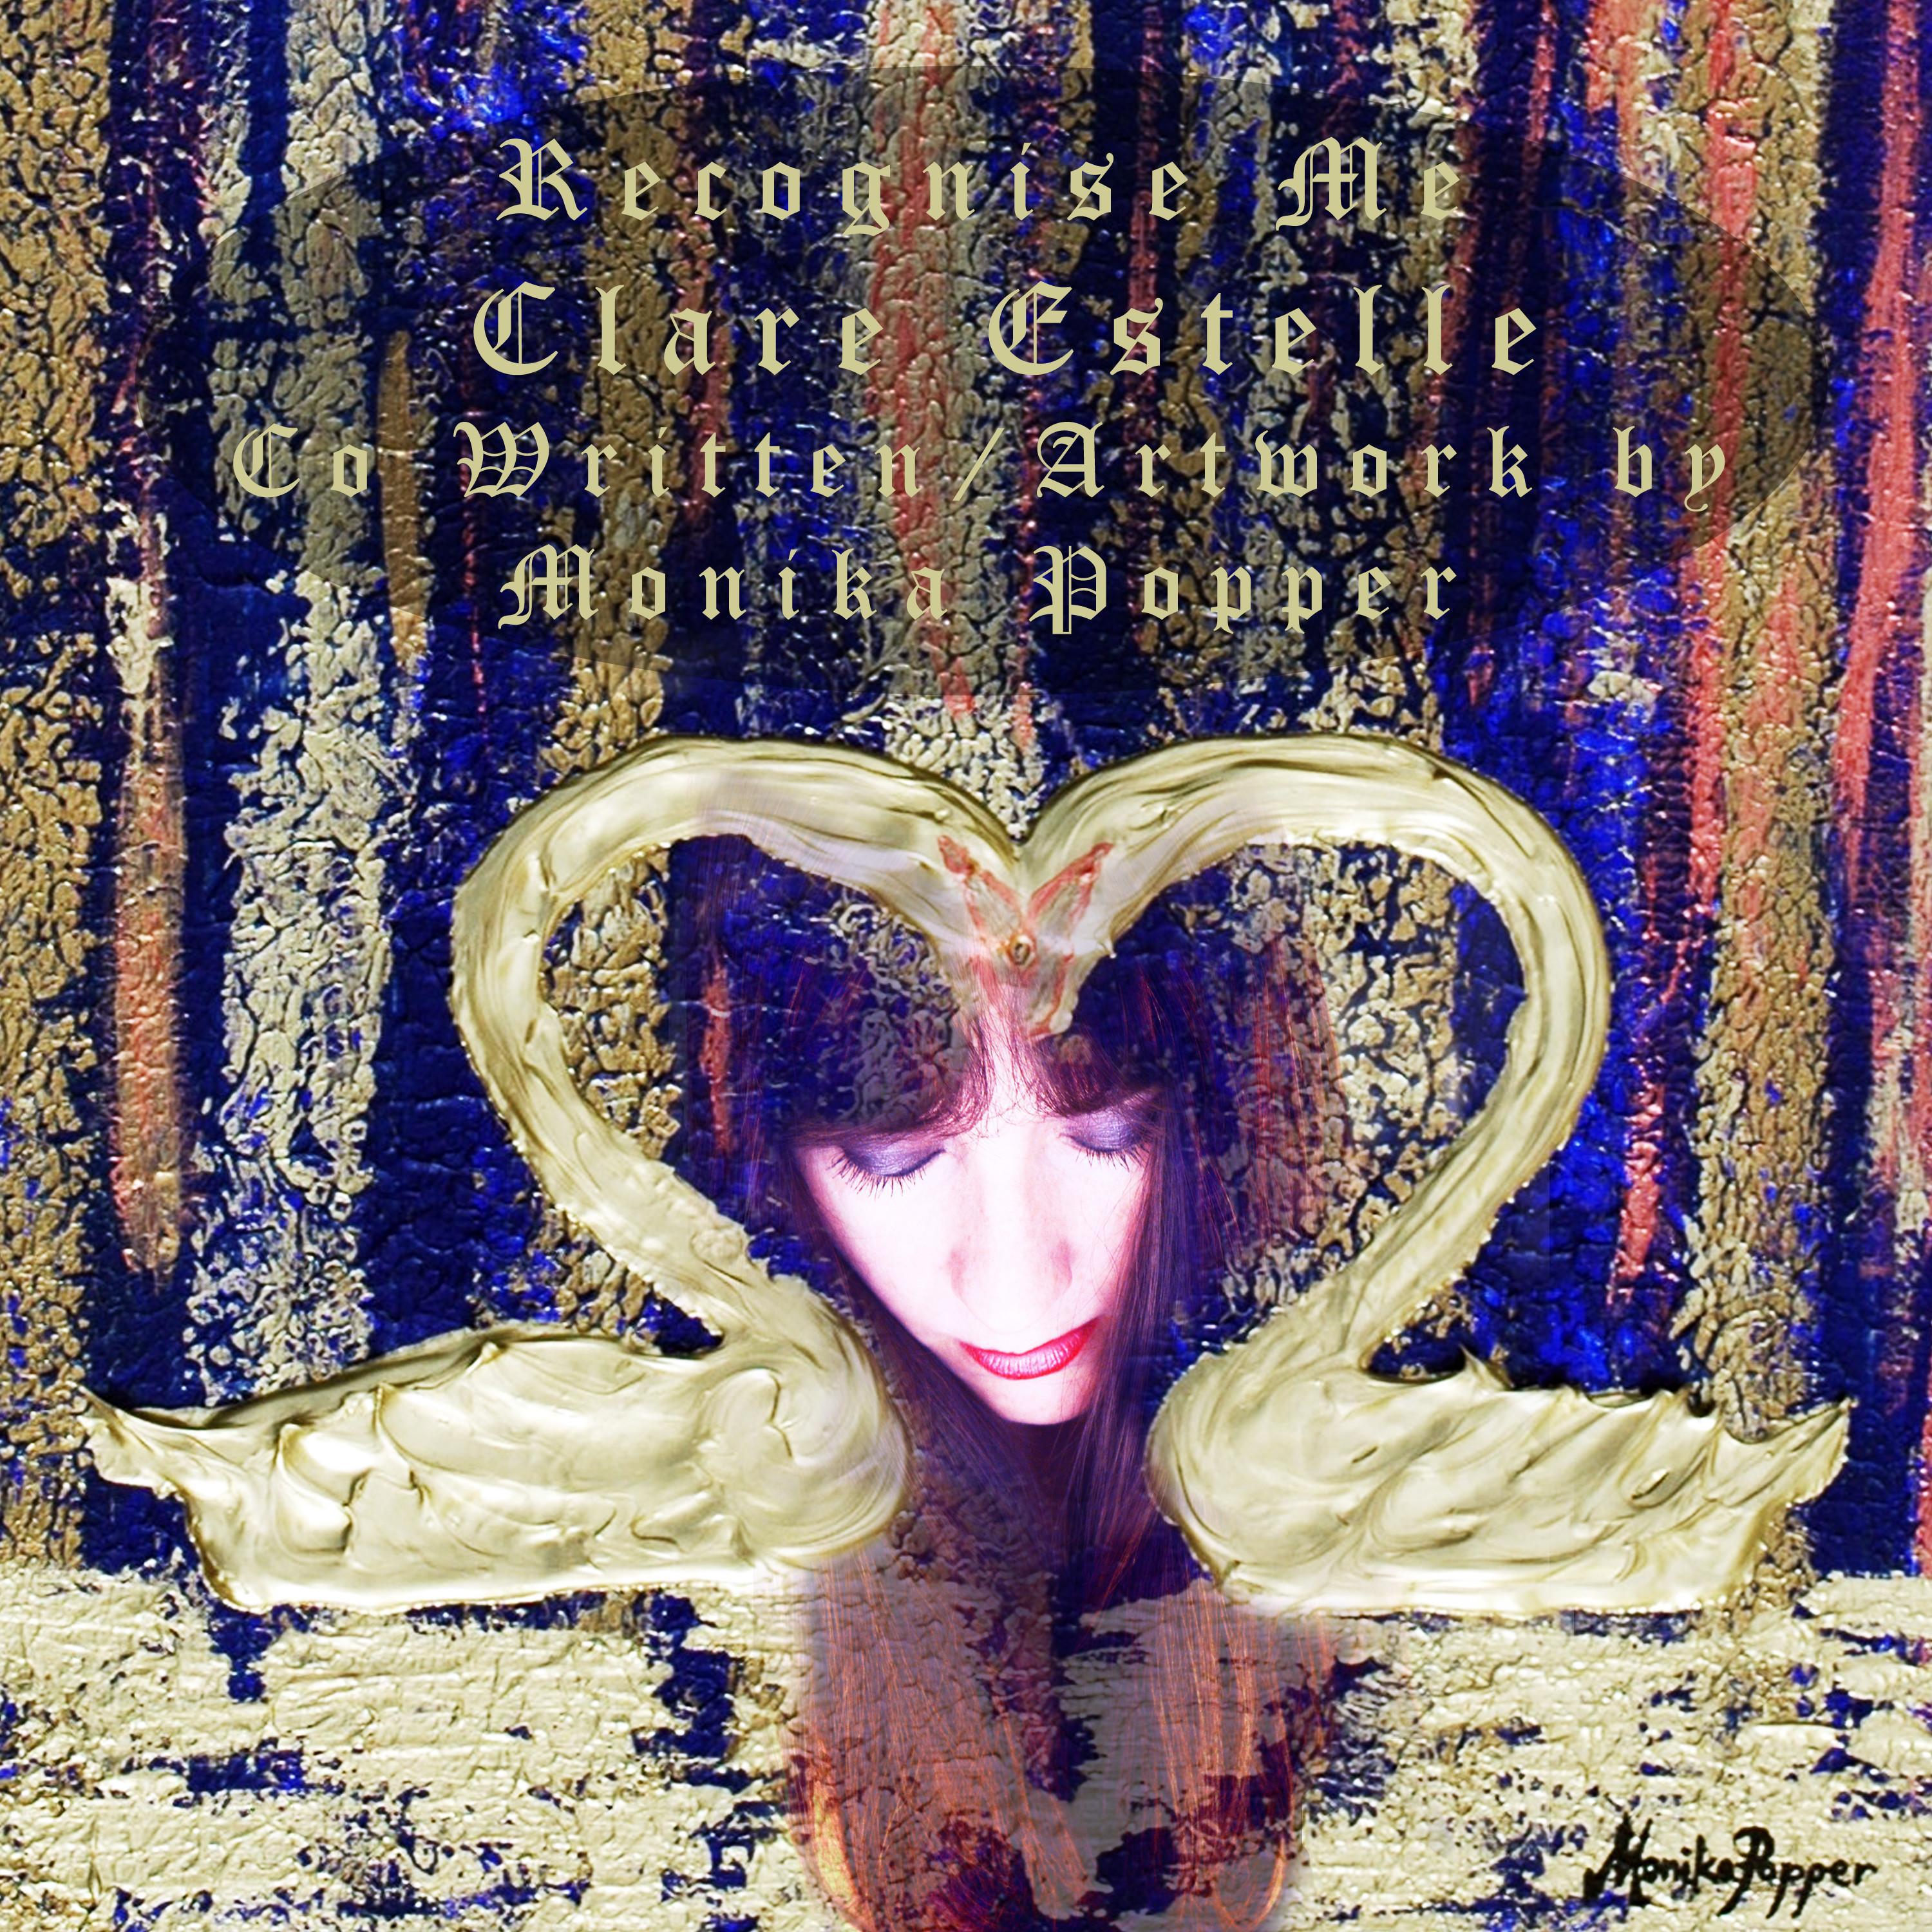 Clare Estelle - Recognise Me